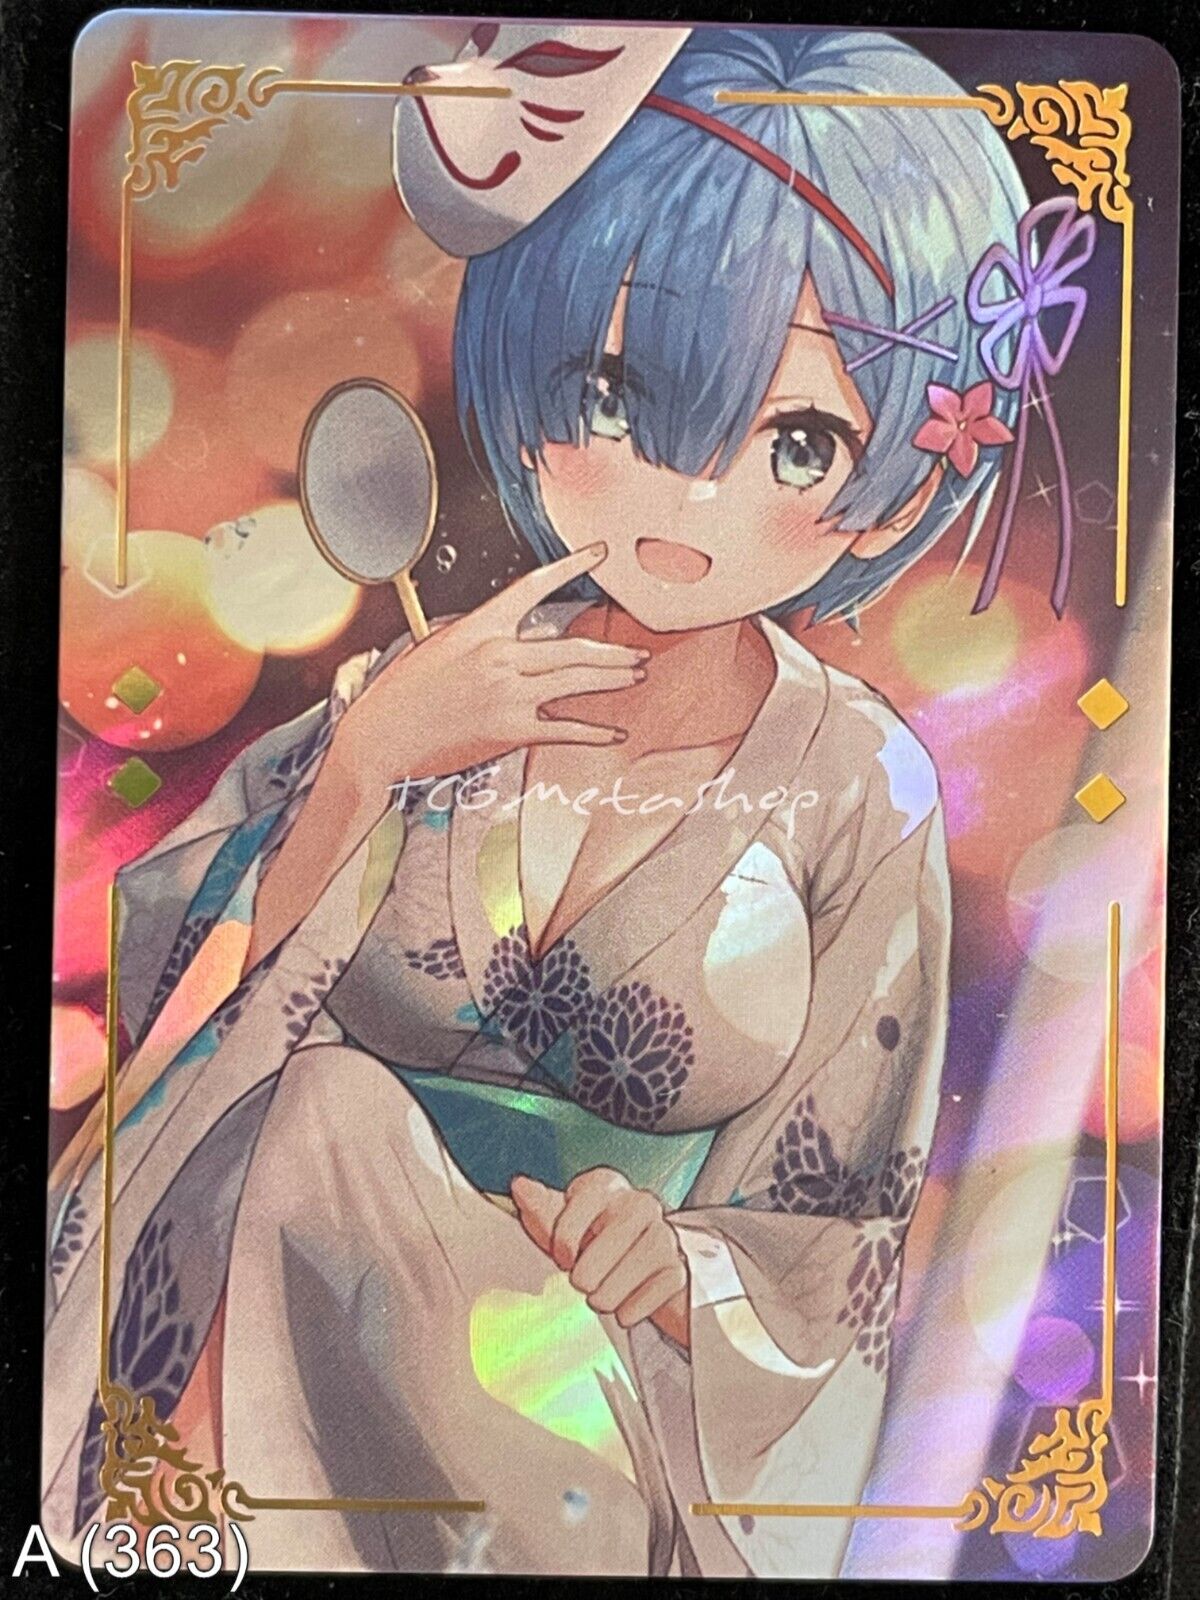 🔥 A 363 Rem Re:Zero Goddess Story Anime Waifu Card ACG 🔥